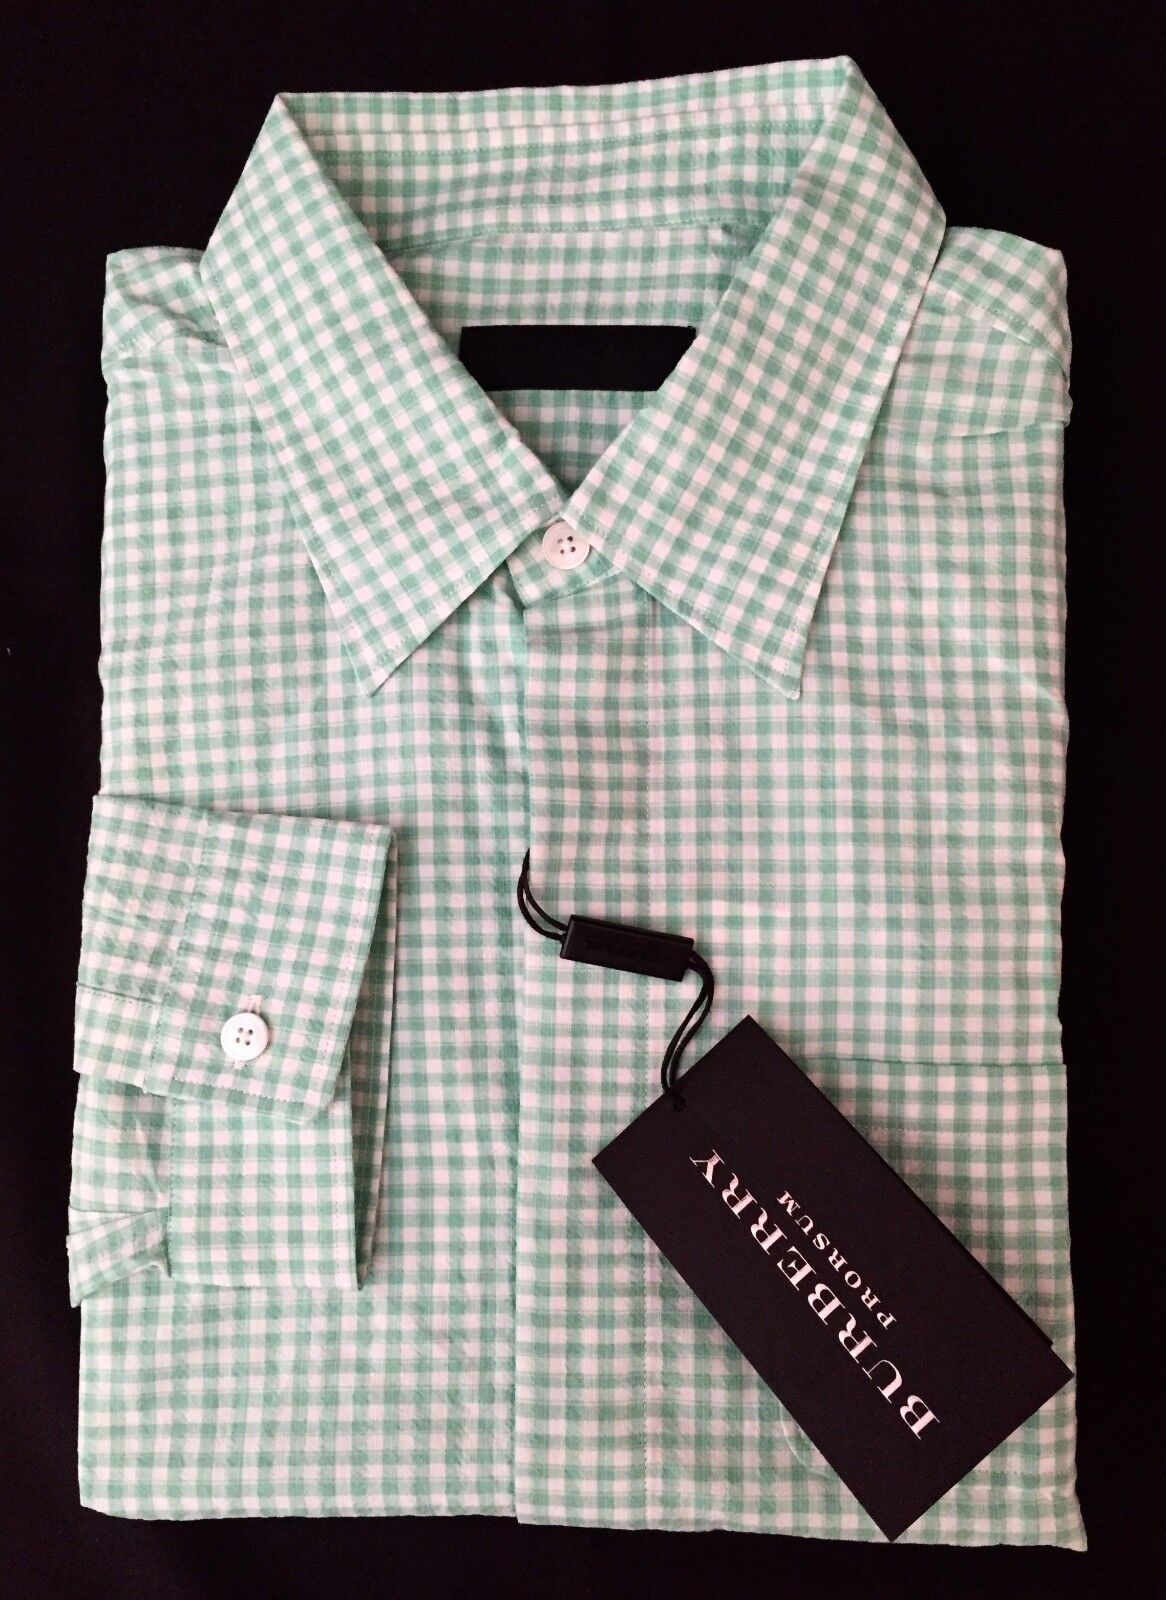 NWT $595 Burberry Prorsum Men's Green Gingham Plaid Button Down Shirt  AUTHENTIC